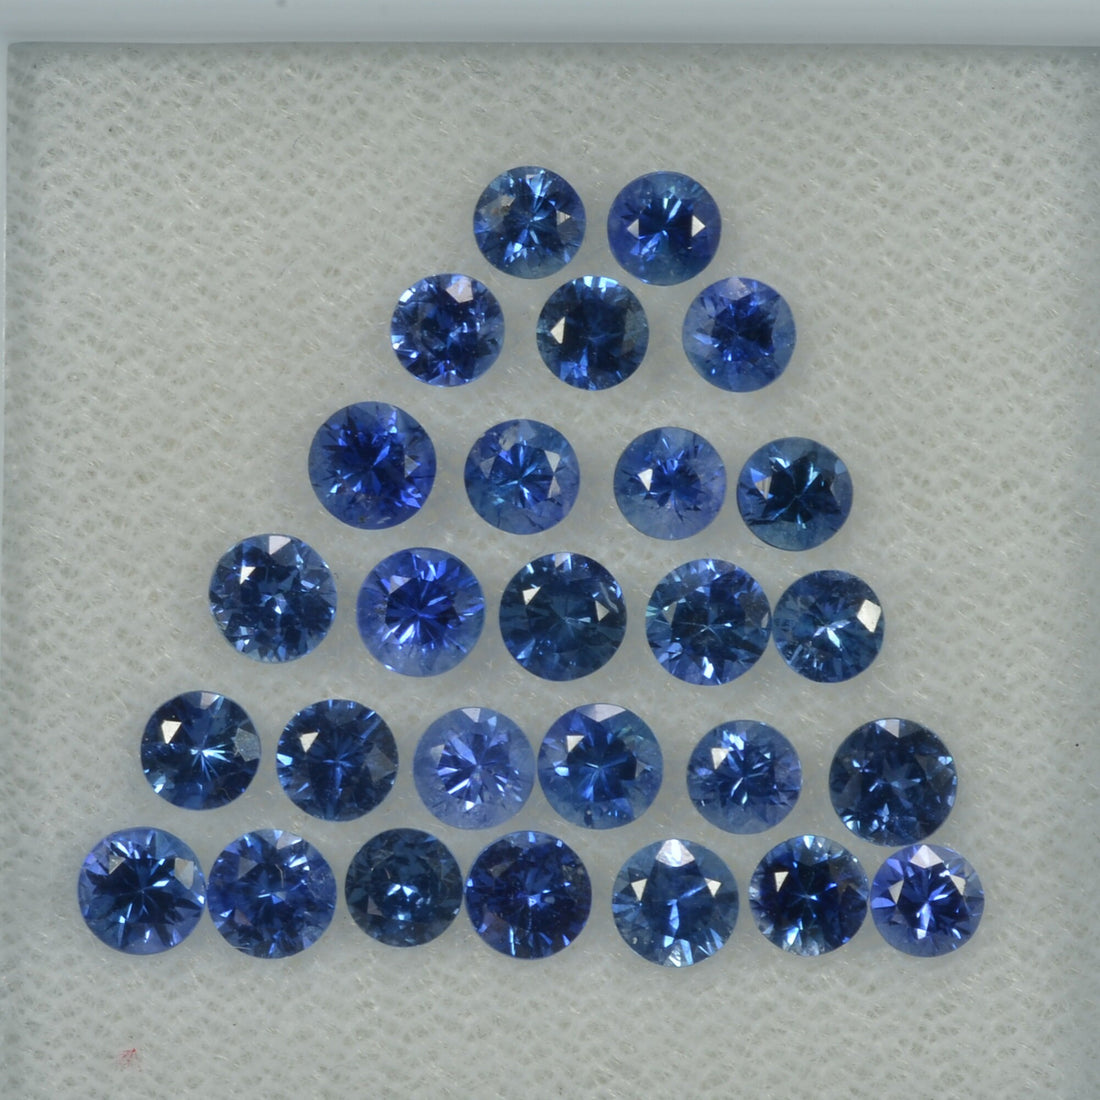 3.0-4.0 mm Natural Blue Sapphire Loose Gemstone Round Diamond Cut Vs Quality Color